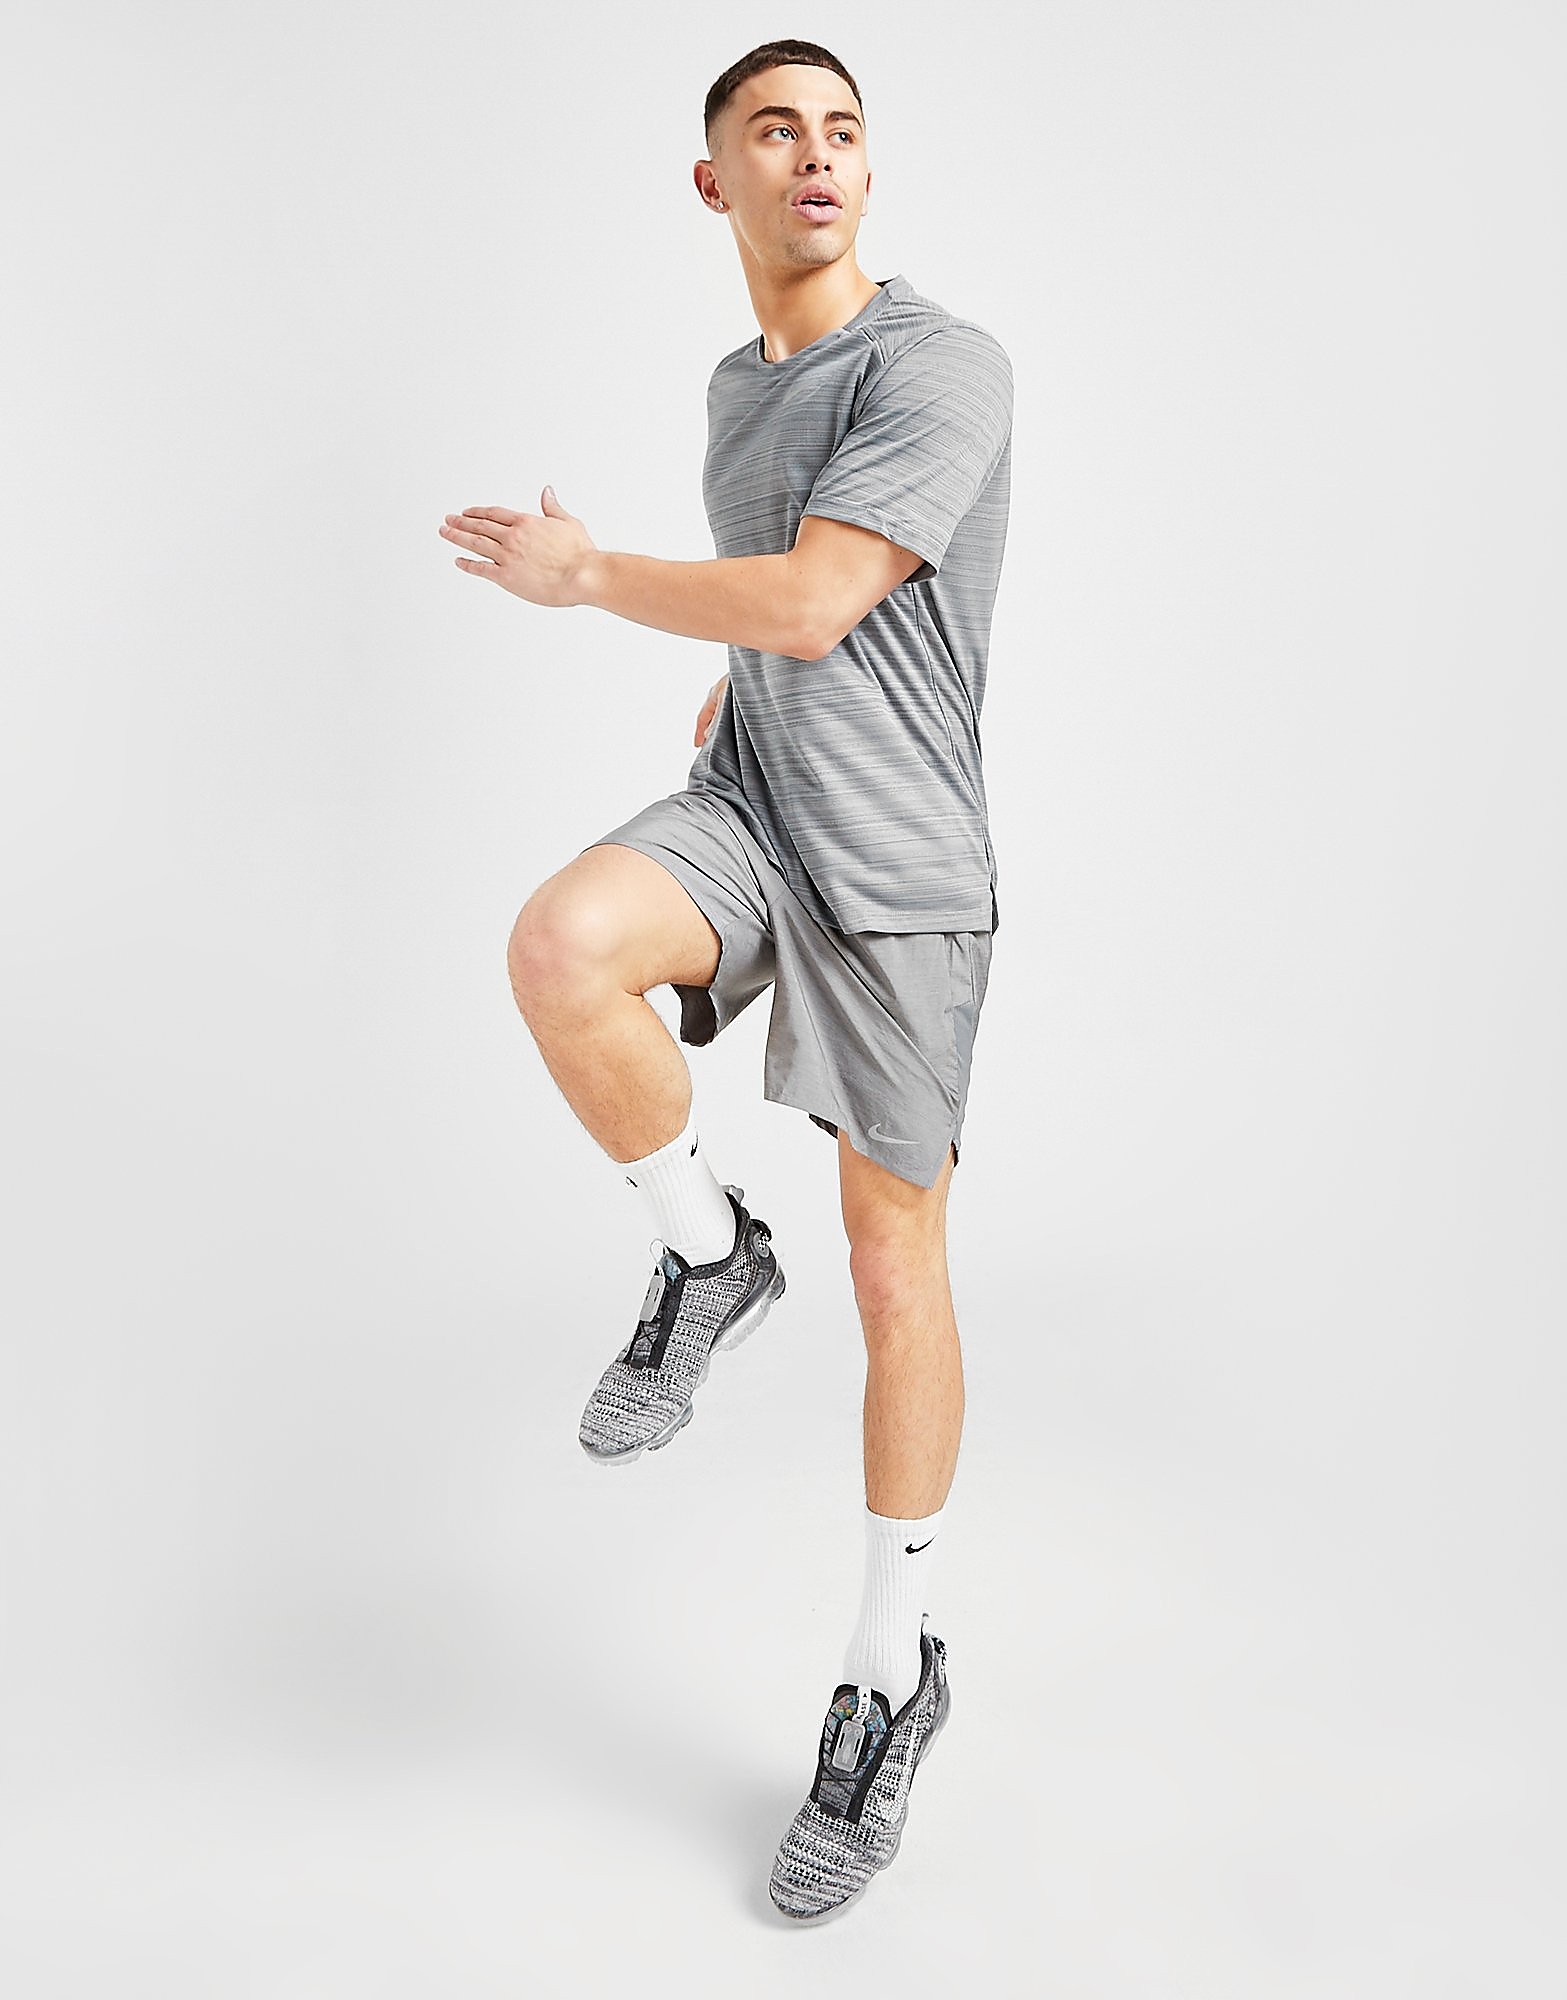 Nike challenger brief lined -juoksushortsit miehet - mens, harmaa, nike